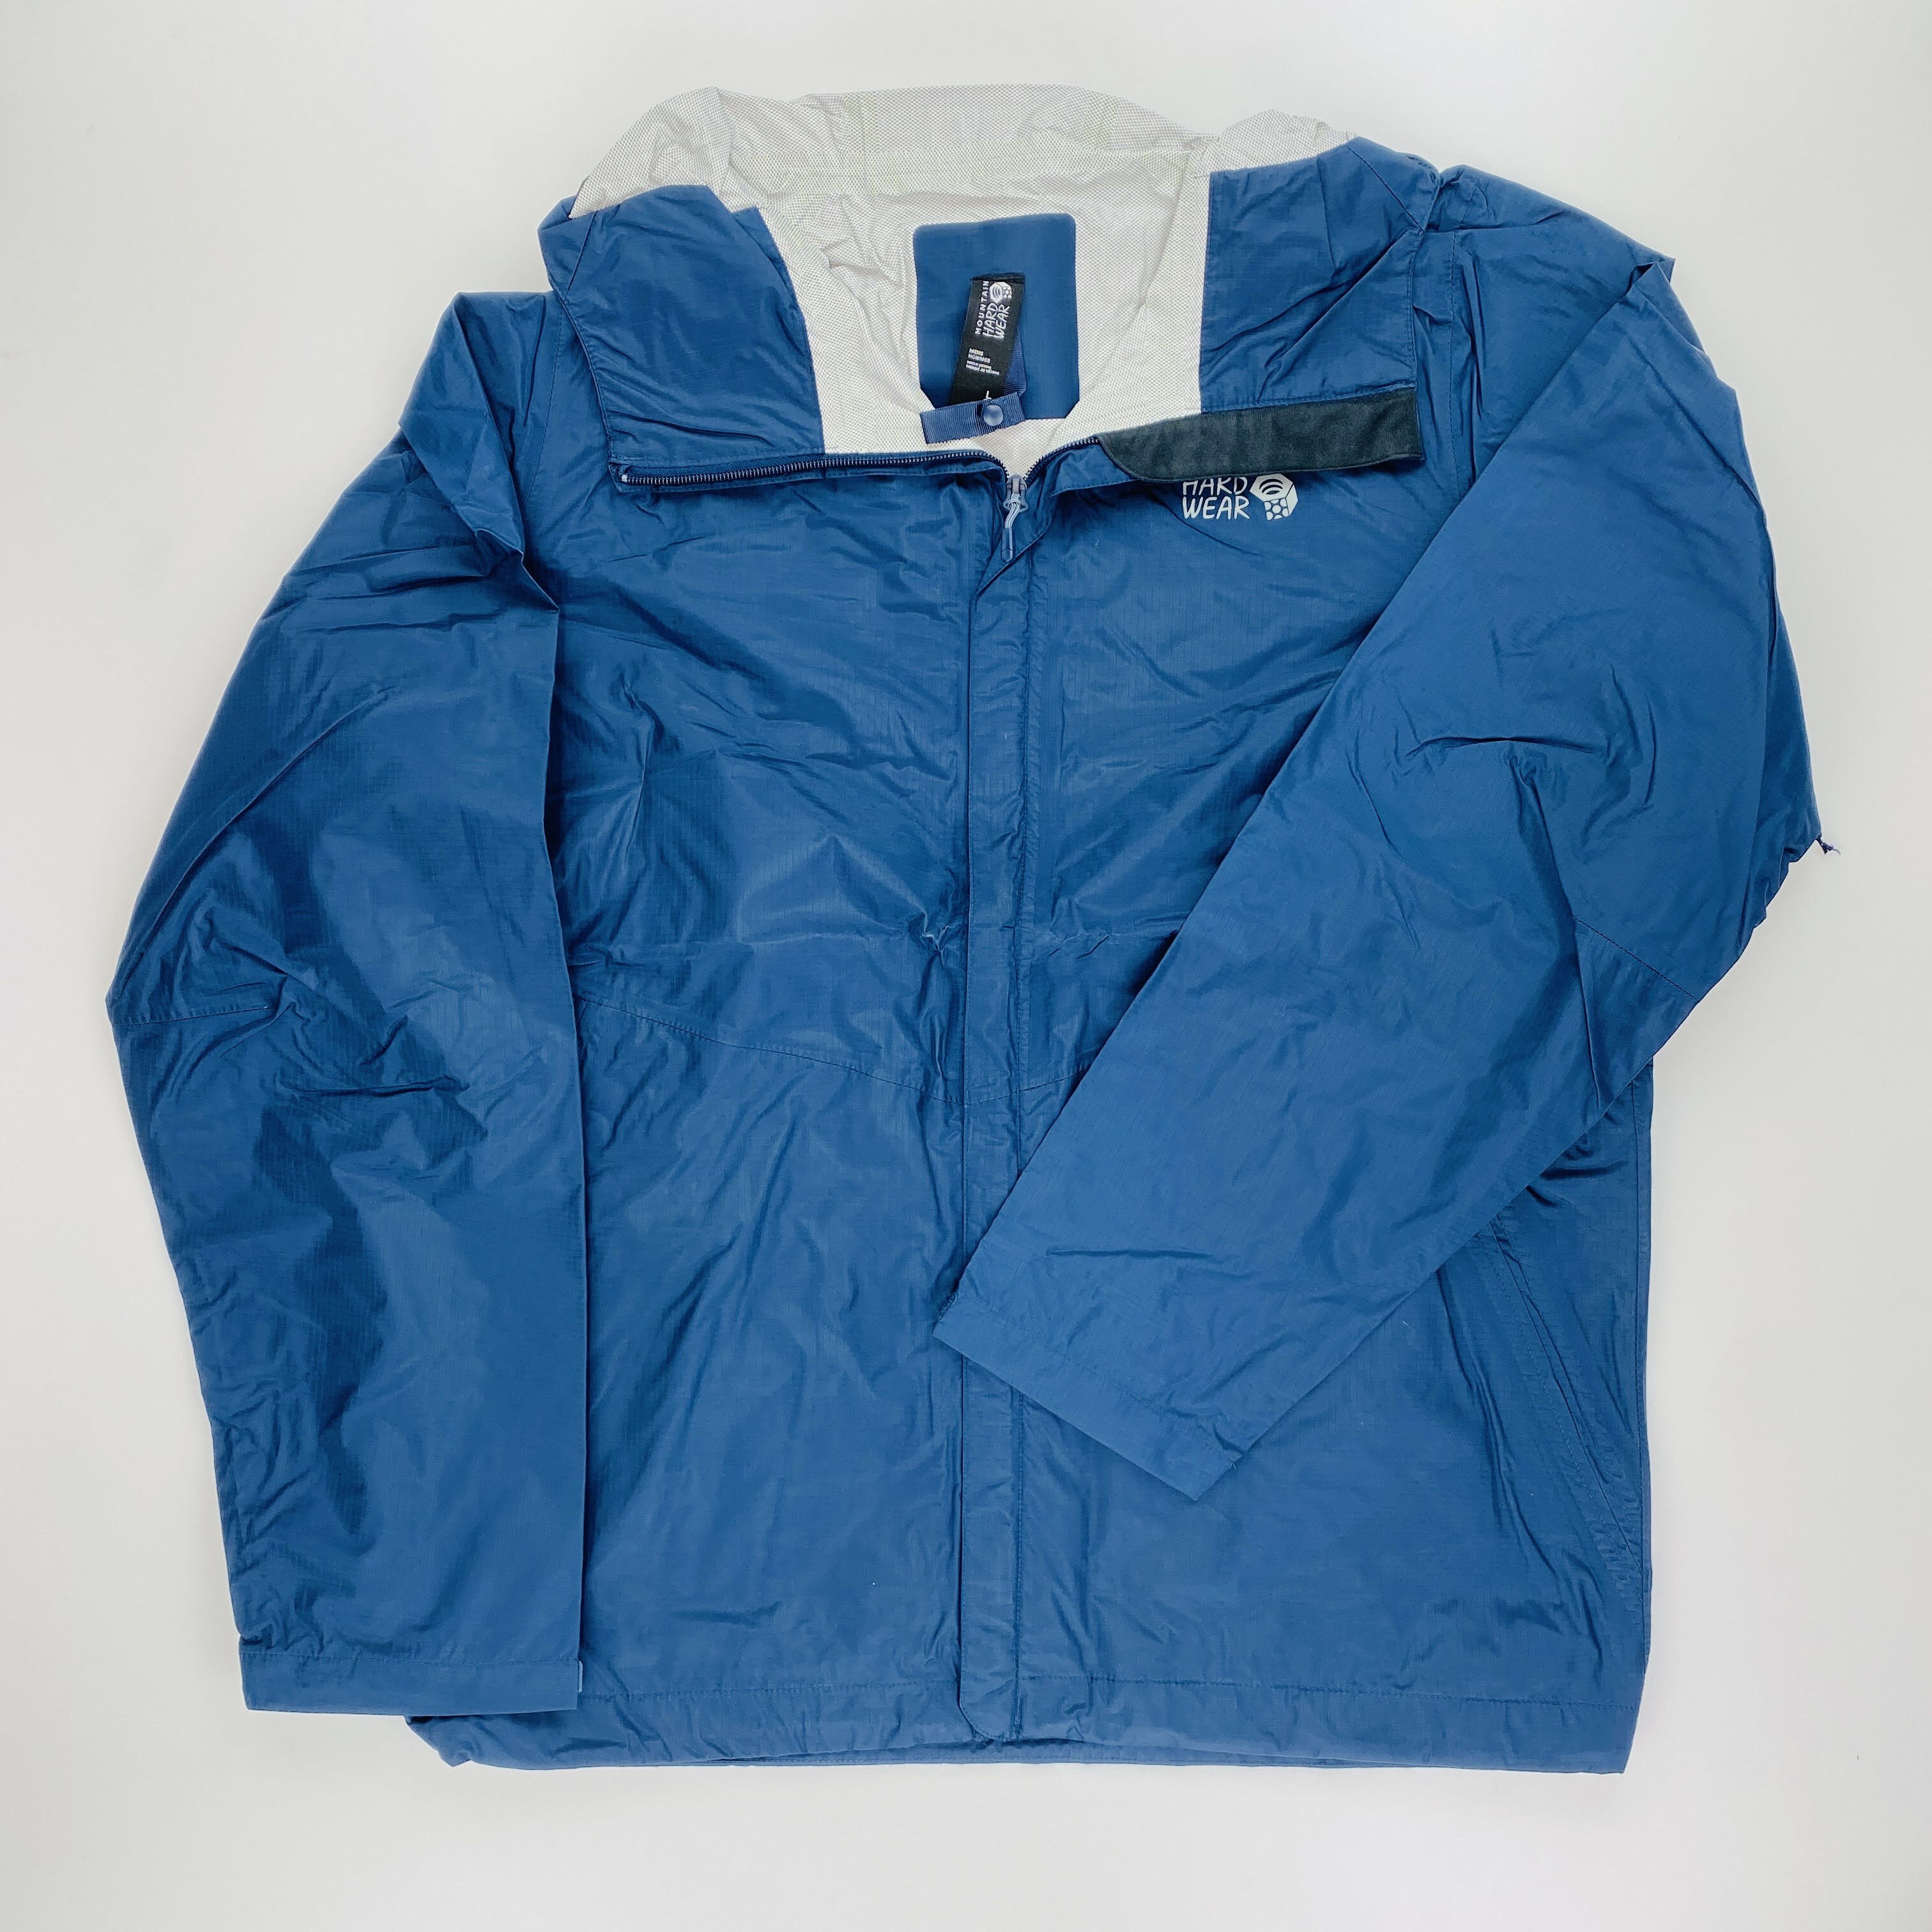 Mountain Hardwear Acadia Man Jacket - Seconde main Veste imperméable homme - Bleu - L | Hardloop